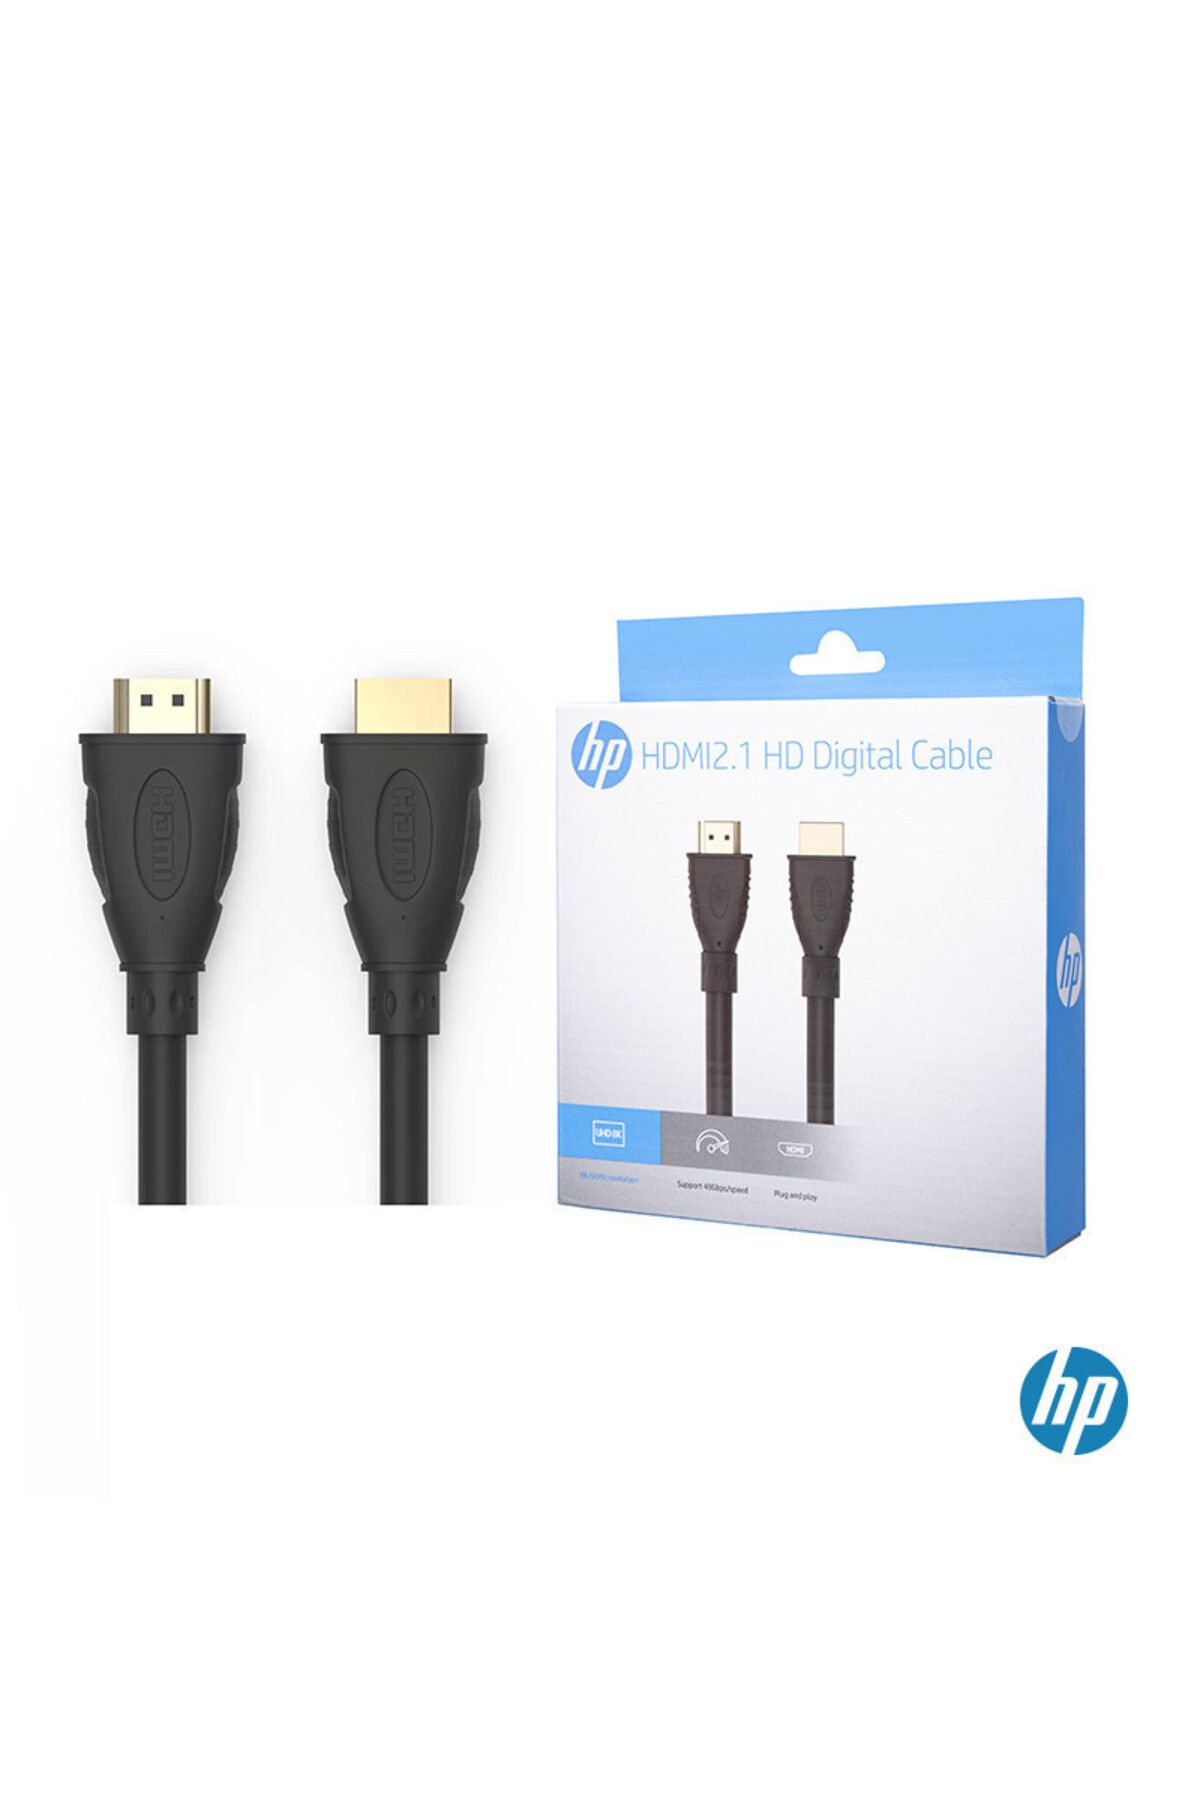 HP Dhc-hd02-3m Hdmı 2.1 Yüksek Hızlı 48 Gpbs 8k(7680 X 4320) 3m Kablo